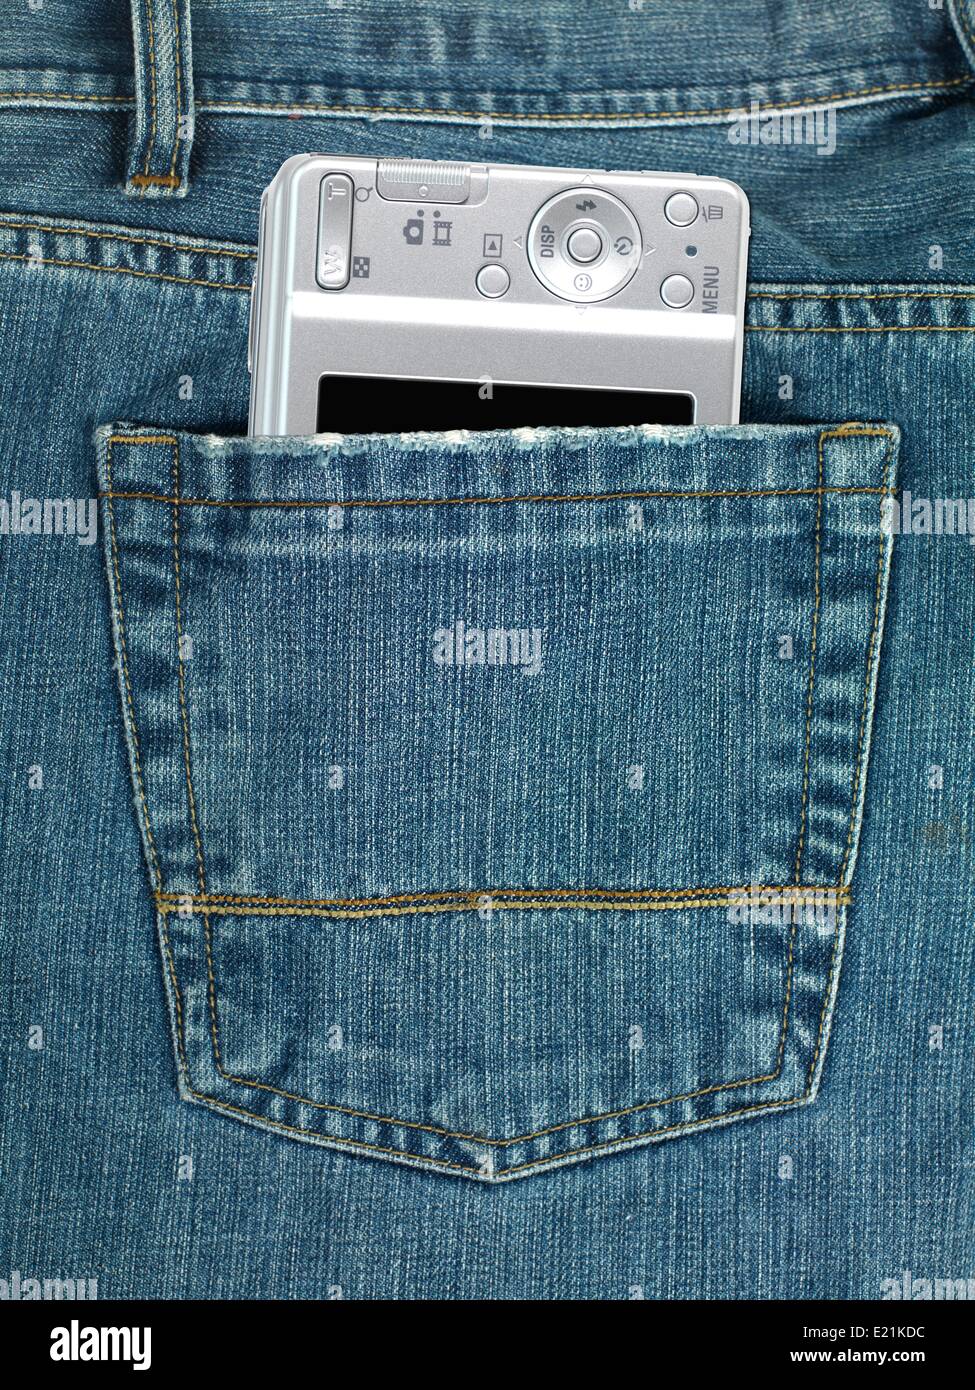 A denium blue jean pocket shot up close Stock Photo